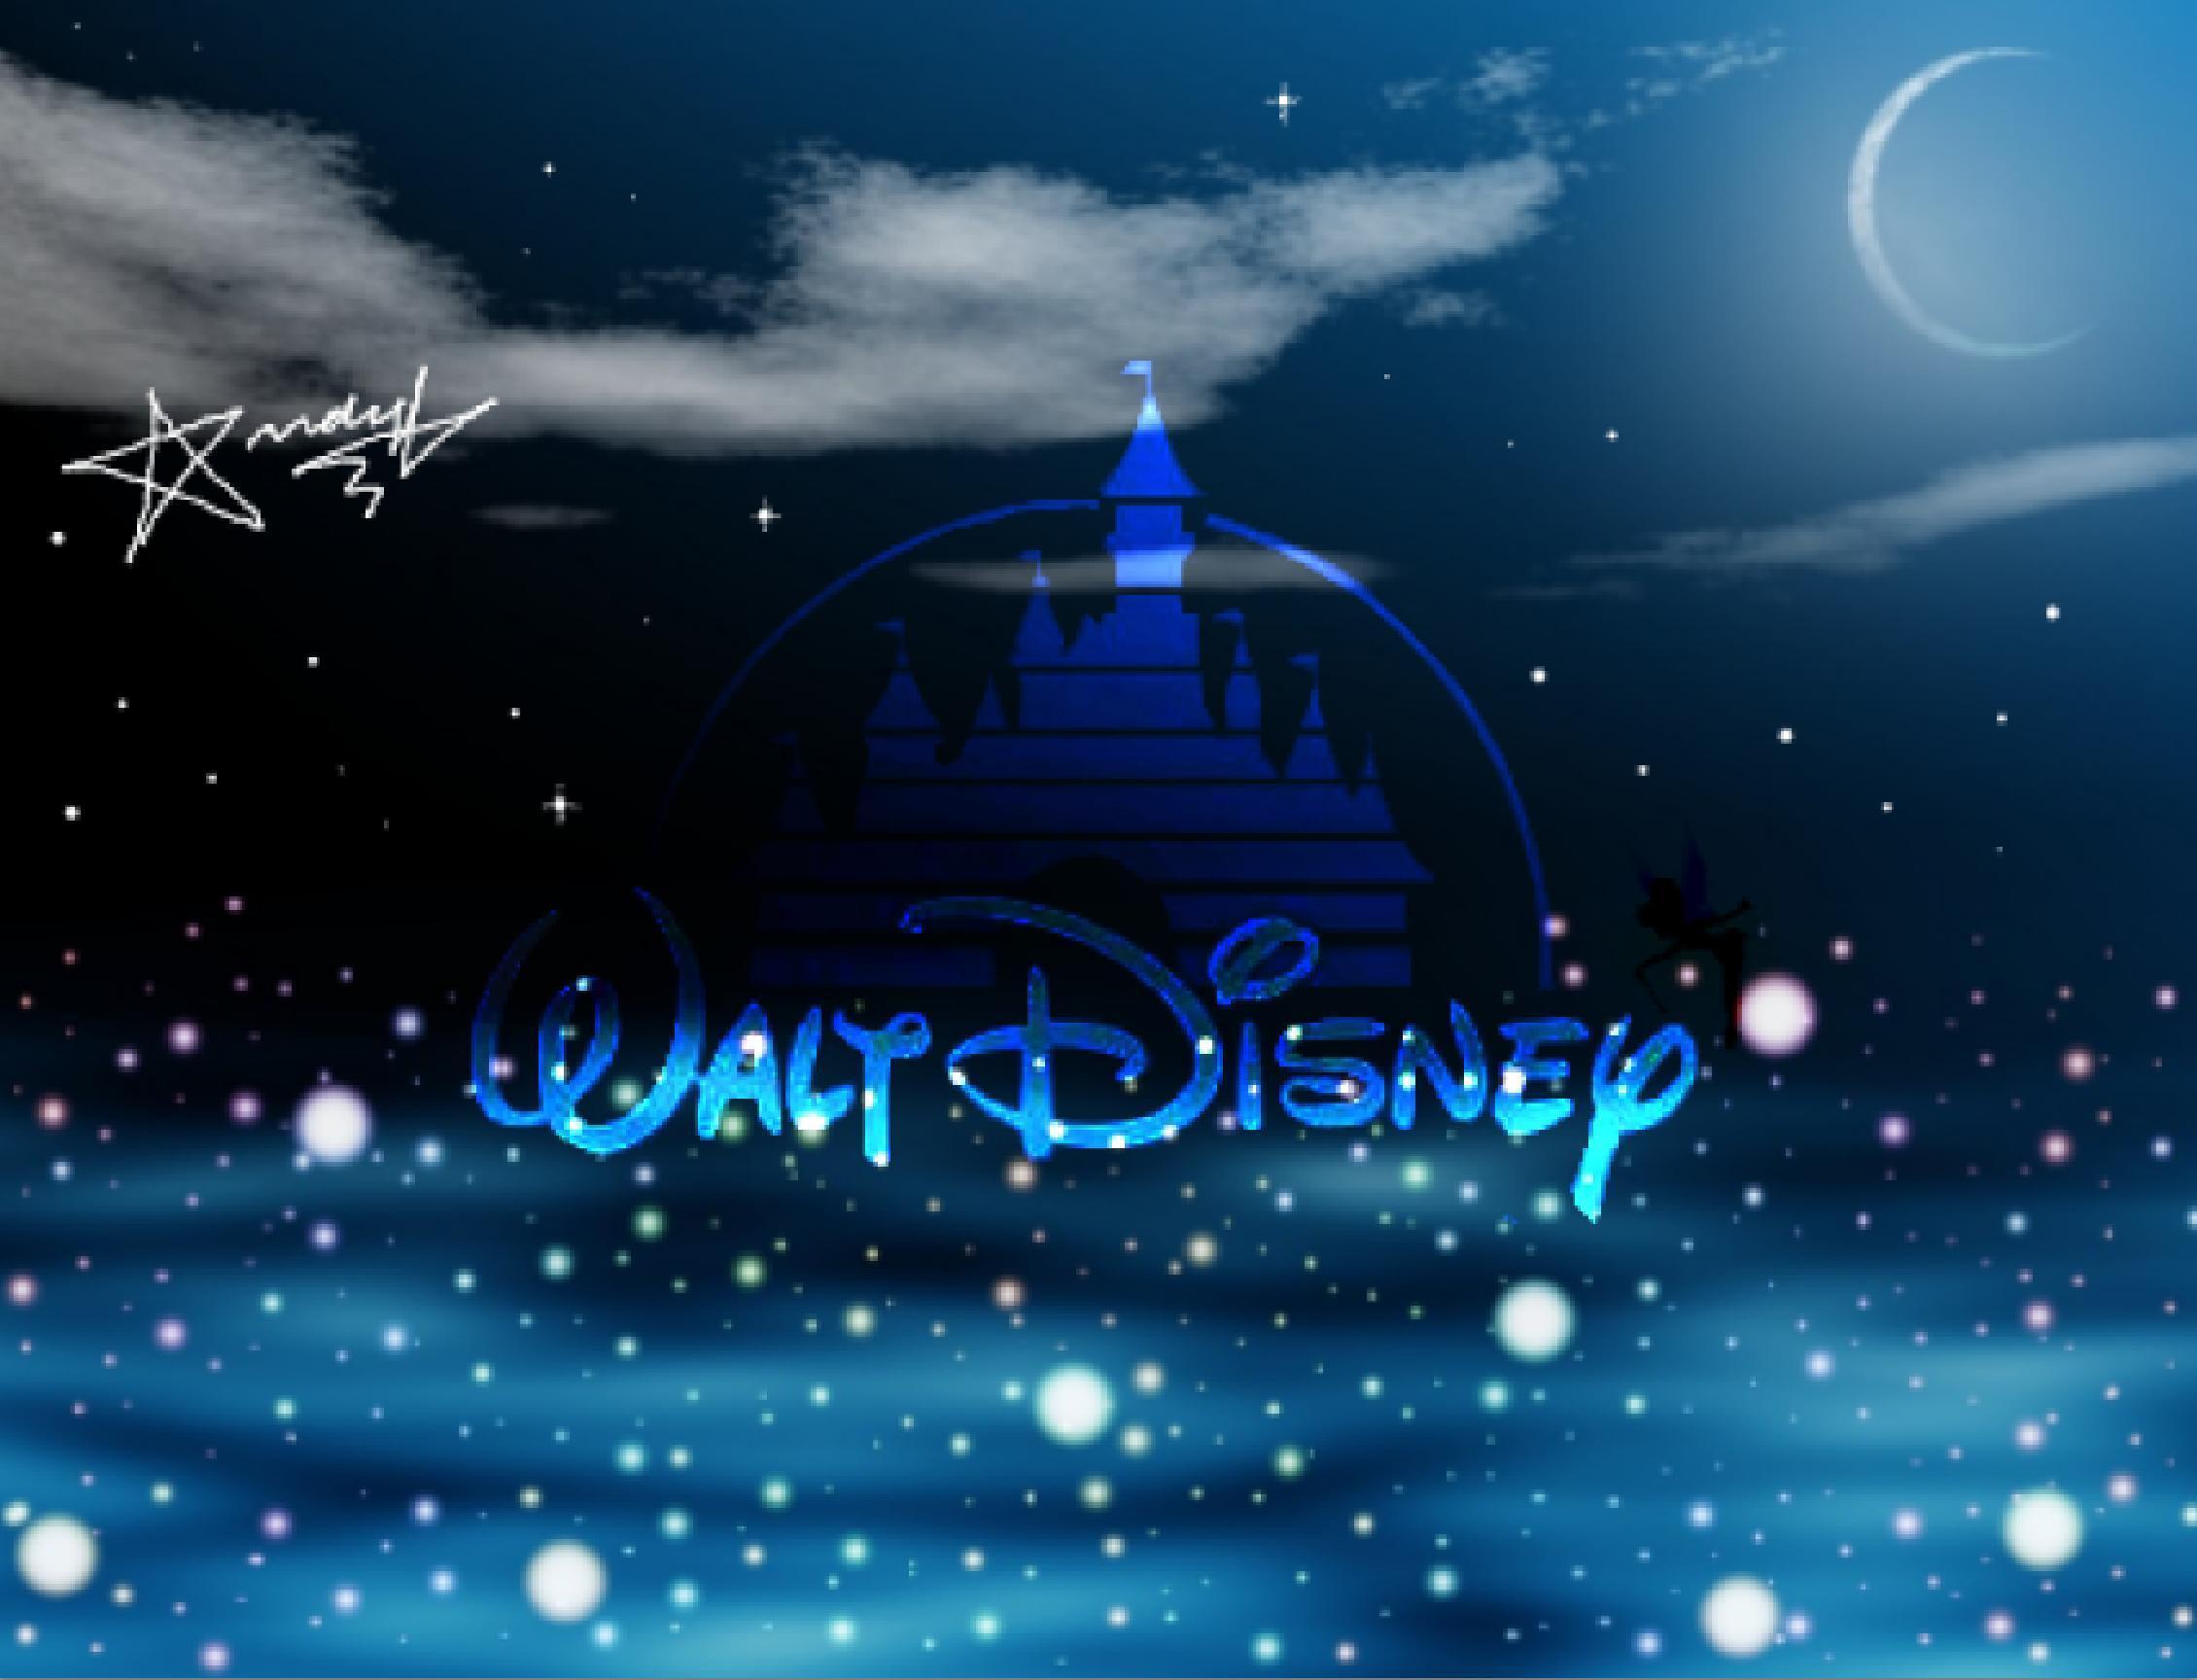 Disney Logo Wallpaper 2560x1427 (270.51 KB)